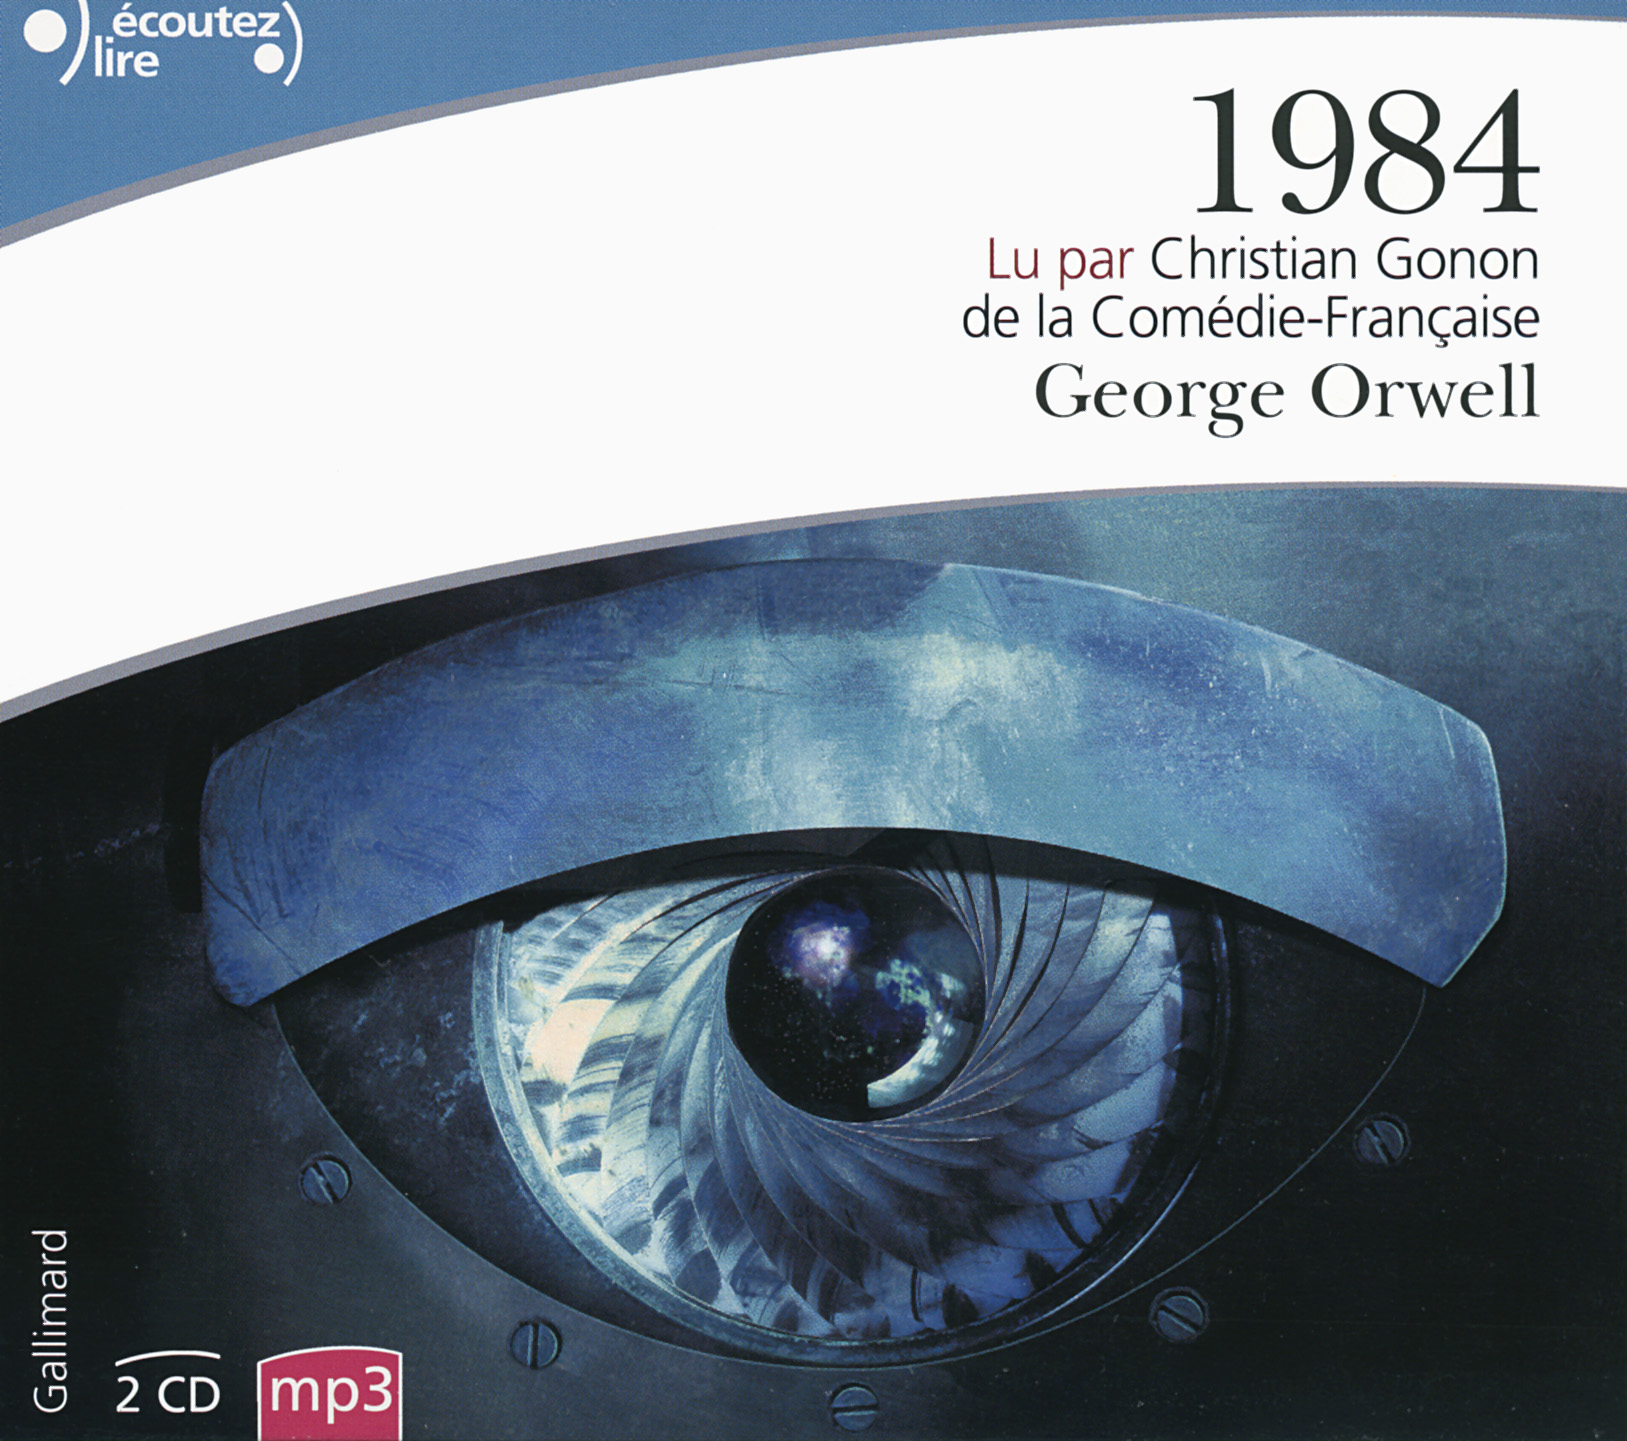 Книга 1984 аудиокнига. 1984 Книга. Джордж Оруэлл "1984". 1984 Livre Audio Français -George Orwell.